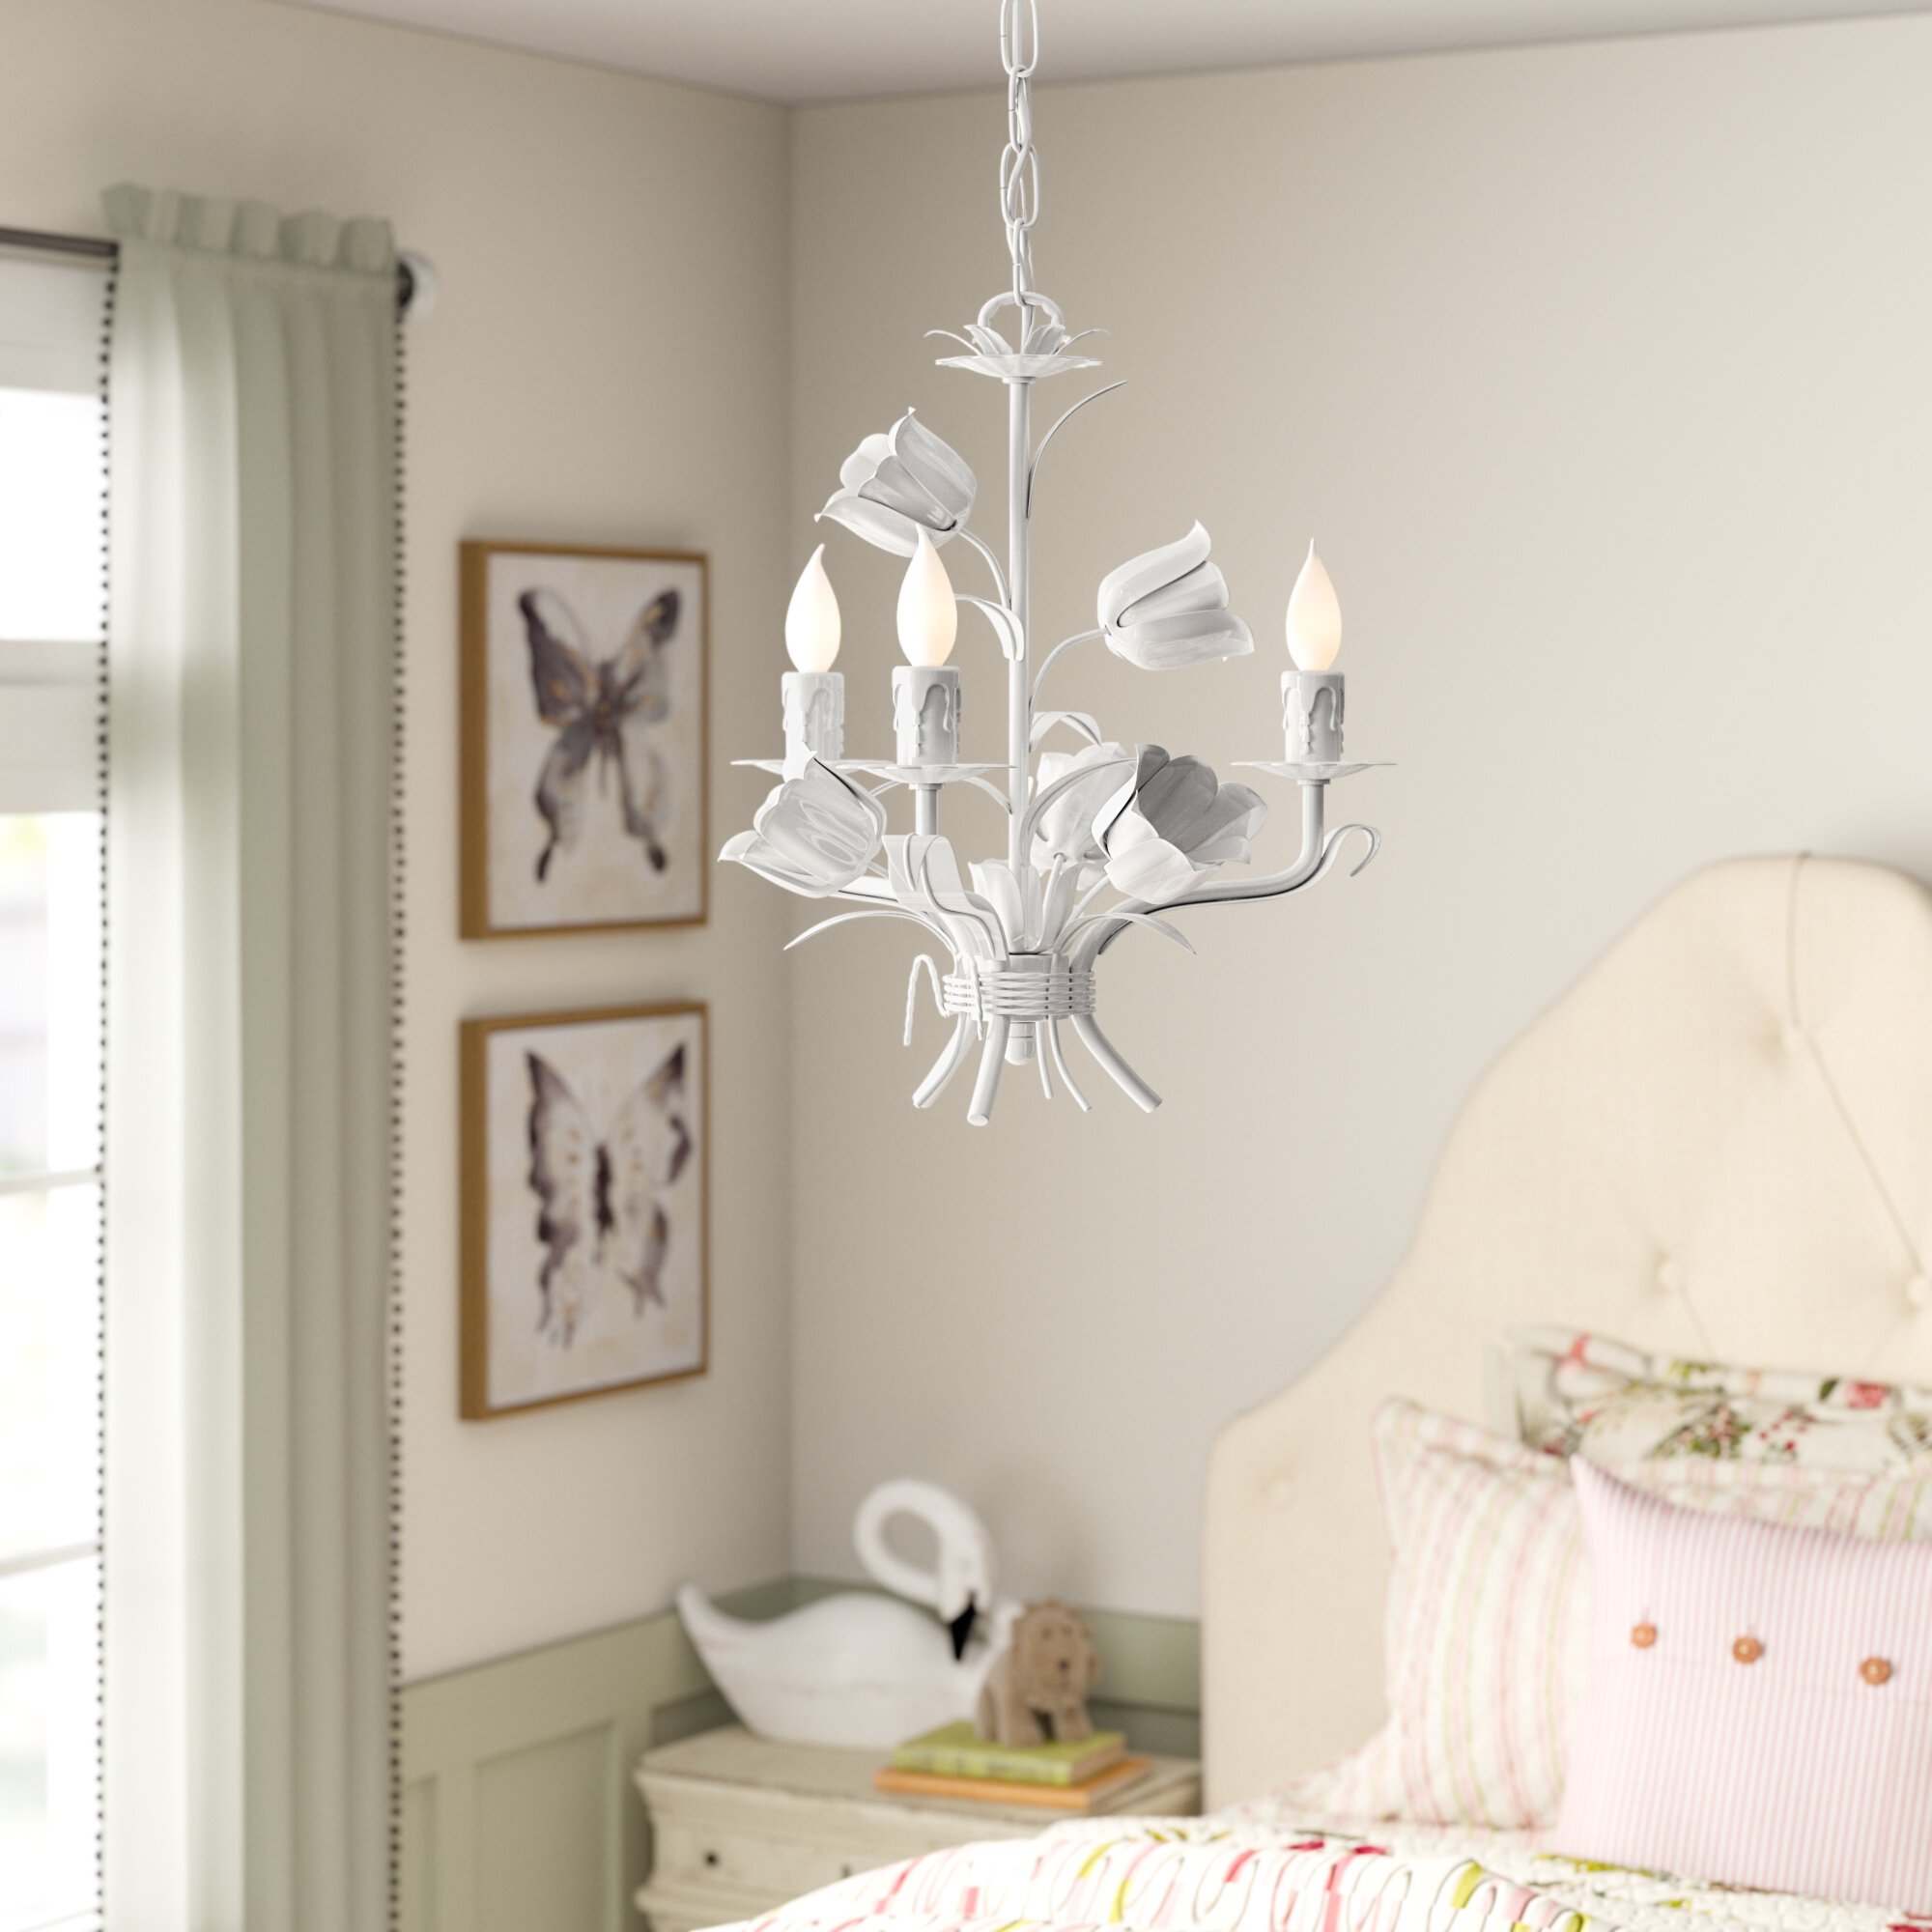 chandeliers for baby girl nursery